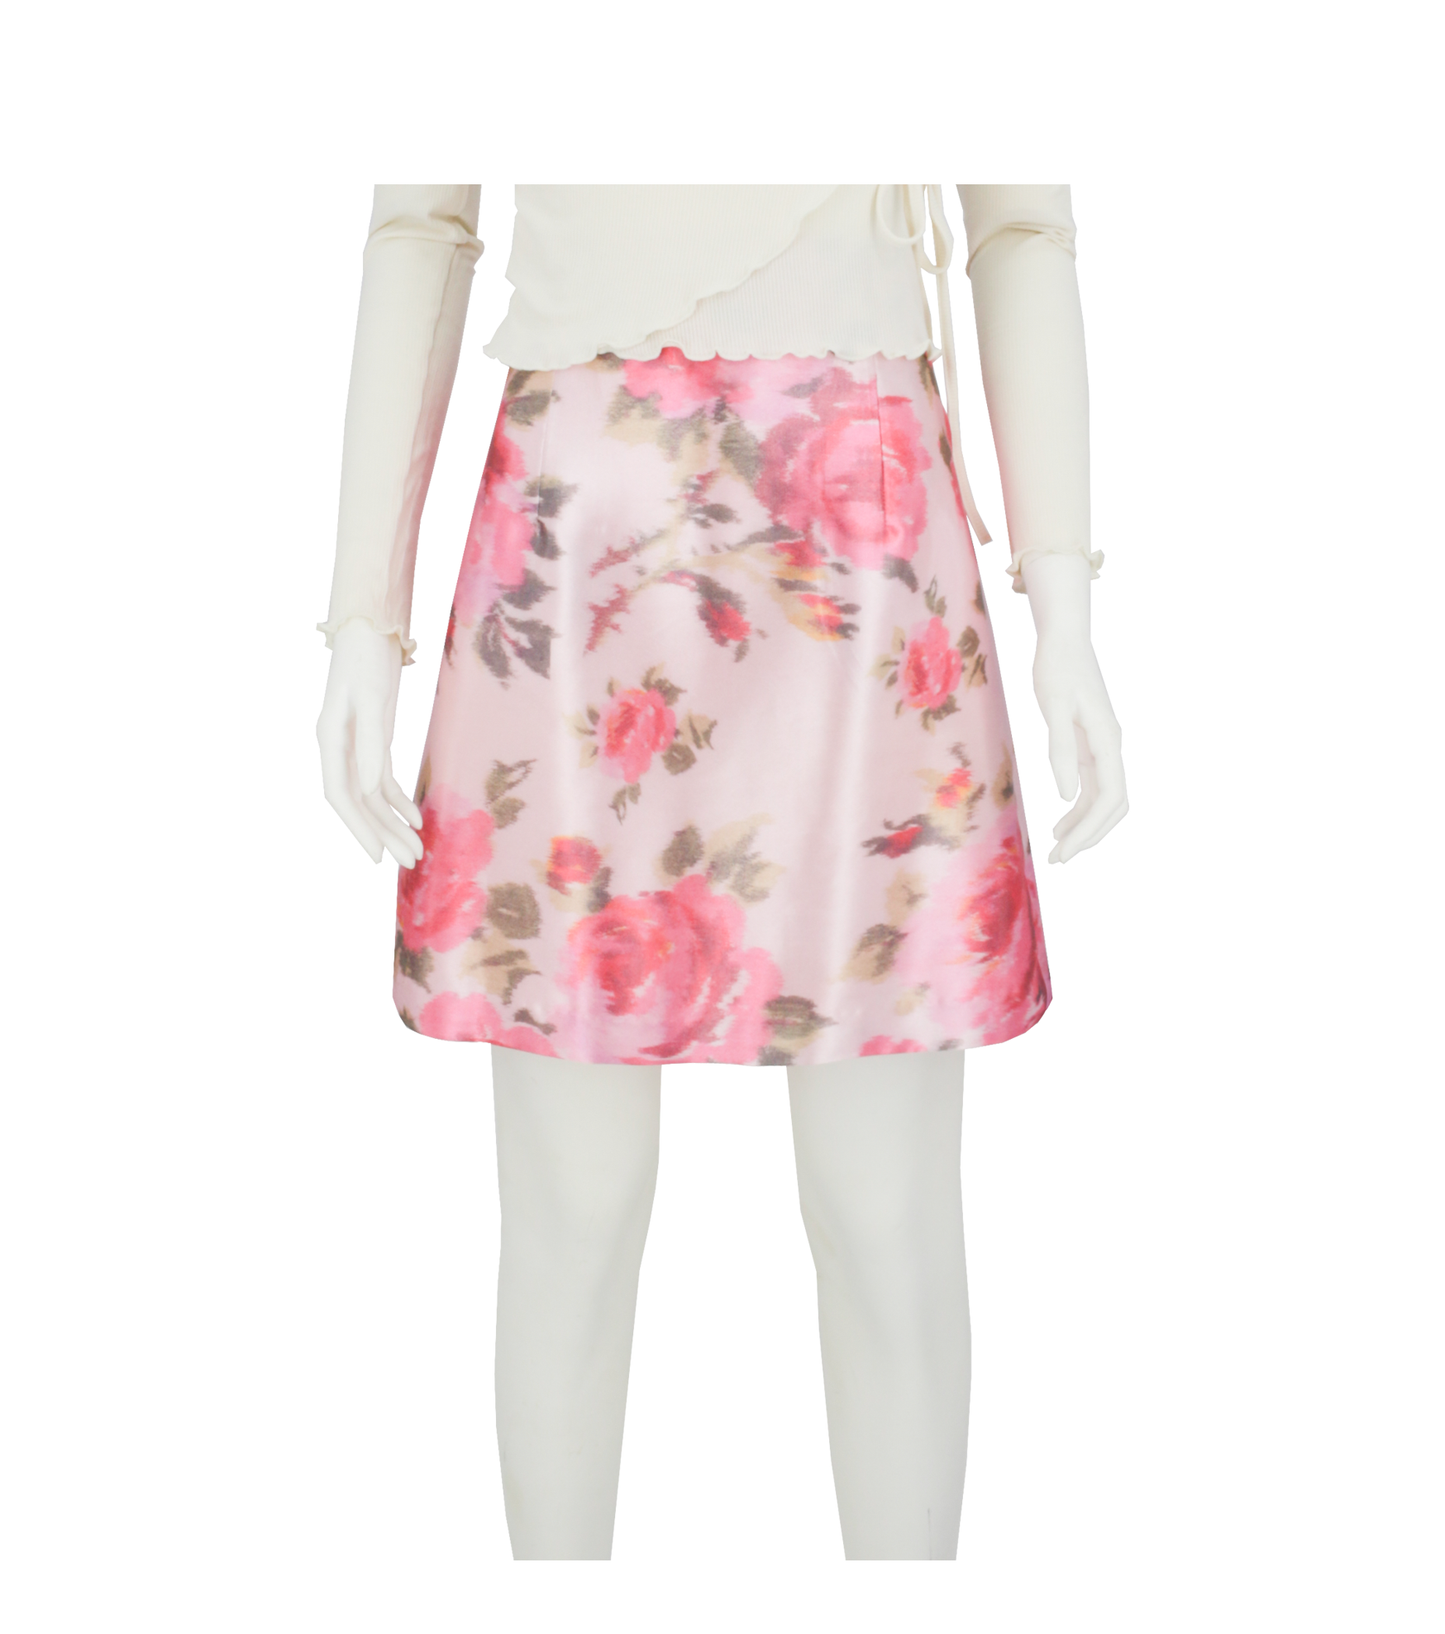 Antique Rose MIni Skirt